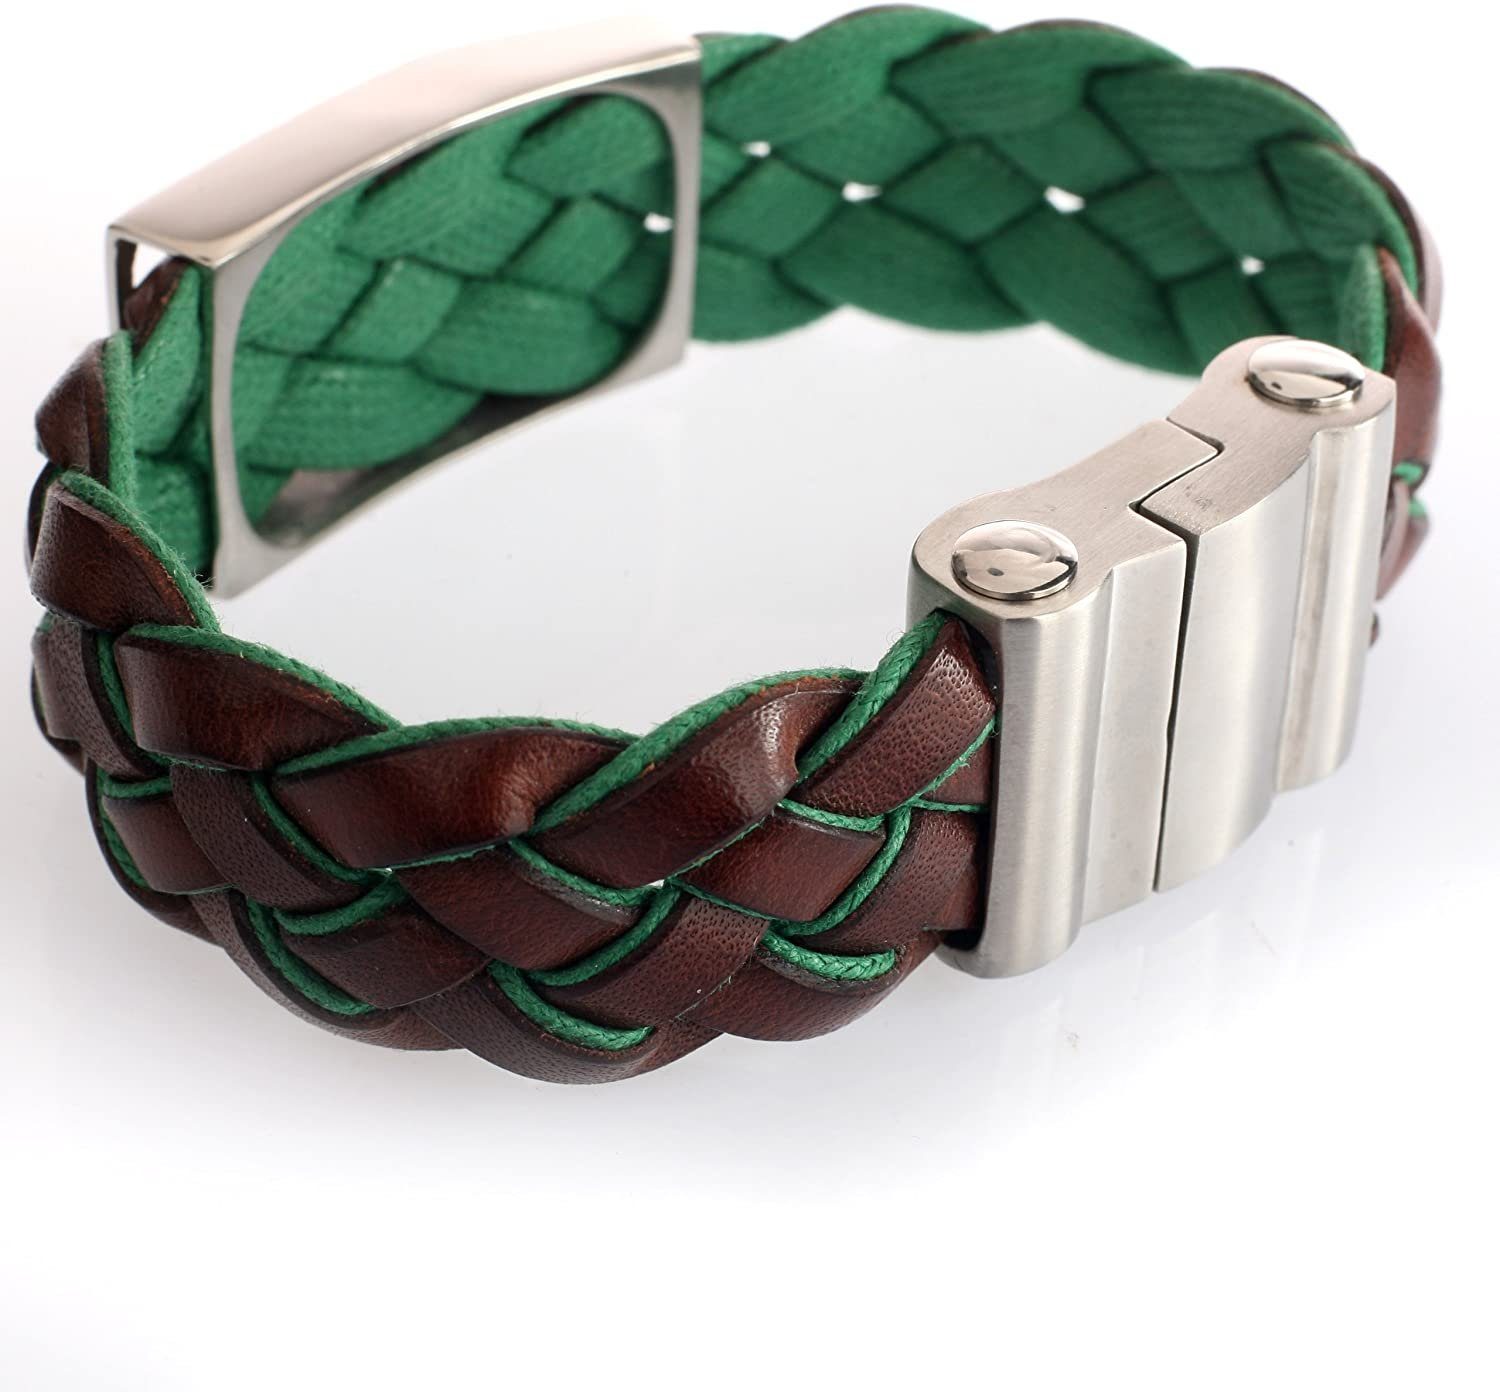 Karisma Lederarmband Karisma Unisex - Grün Armband Breite Braun mit Farbe BG174.10.BW.GR-22cm Platte 20mm - und Leder